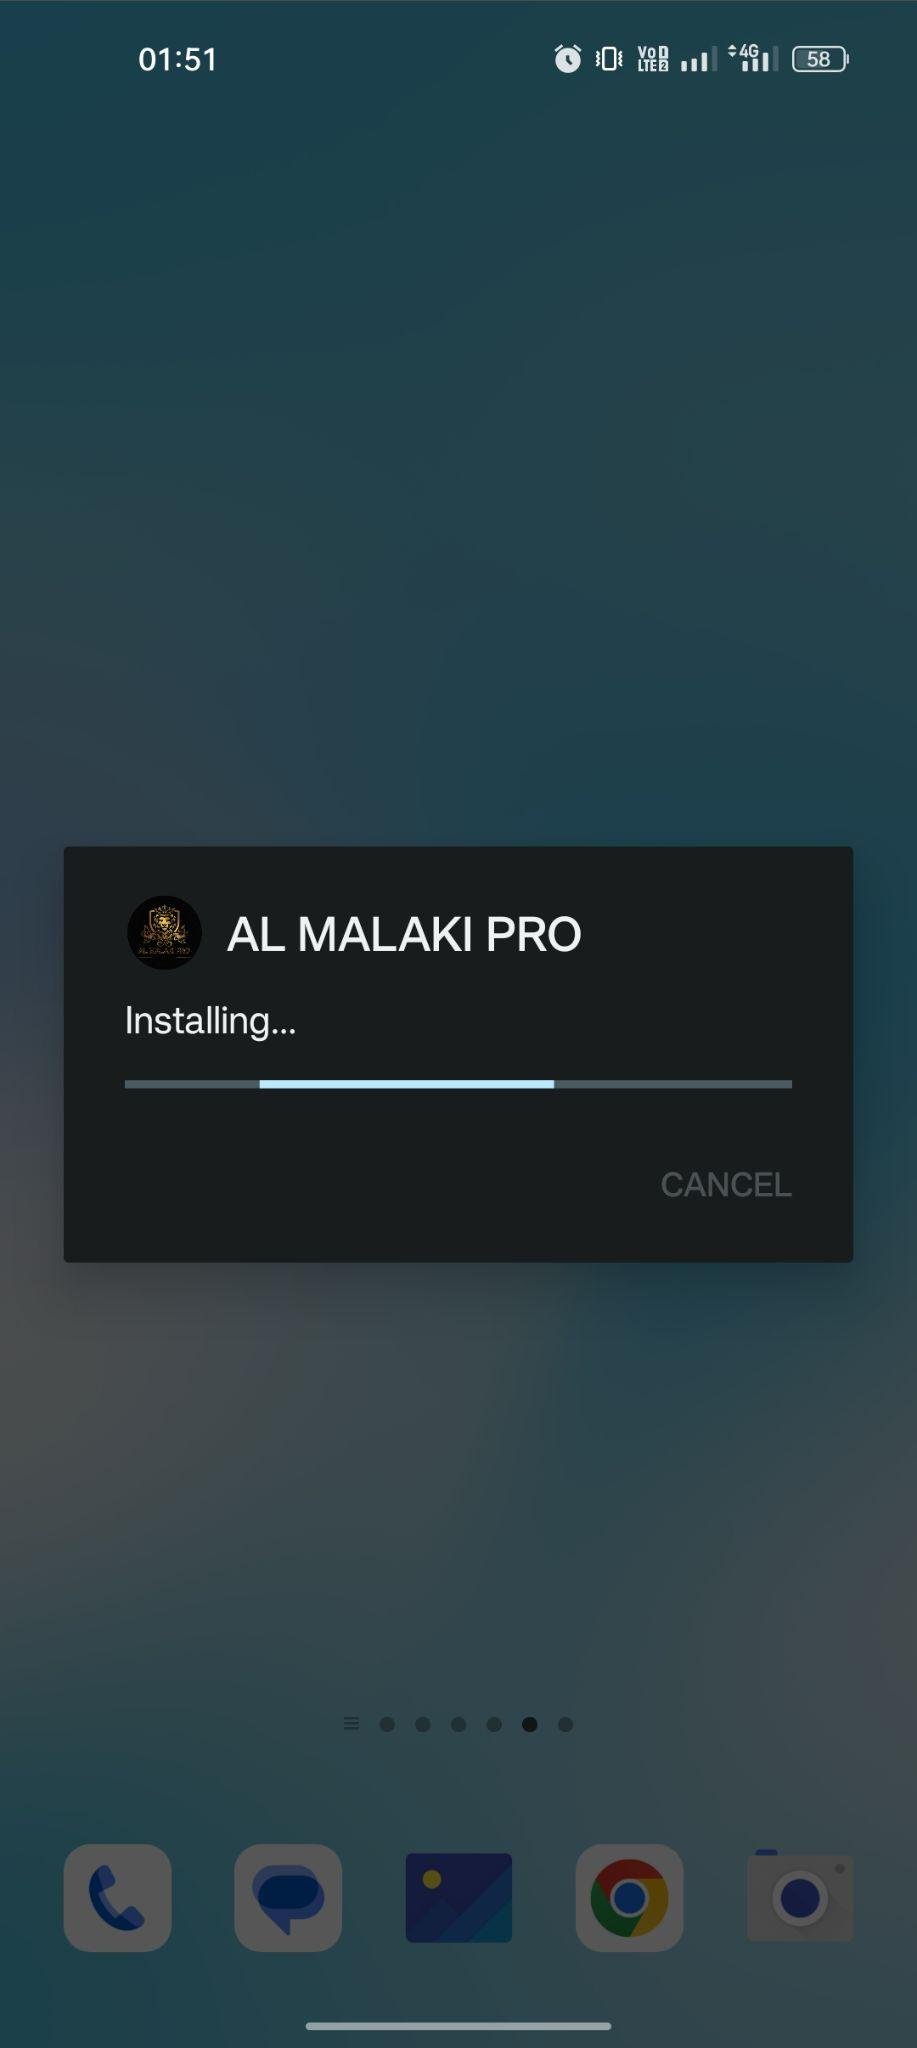 AL MALAKI PRO apk installing